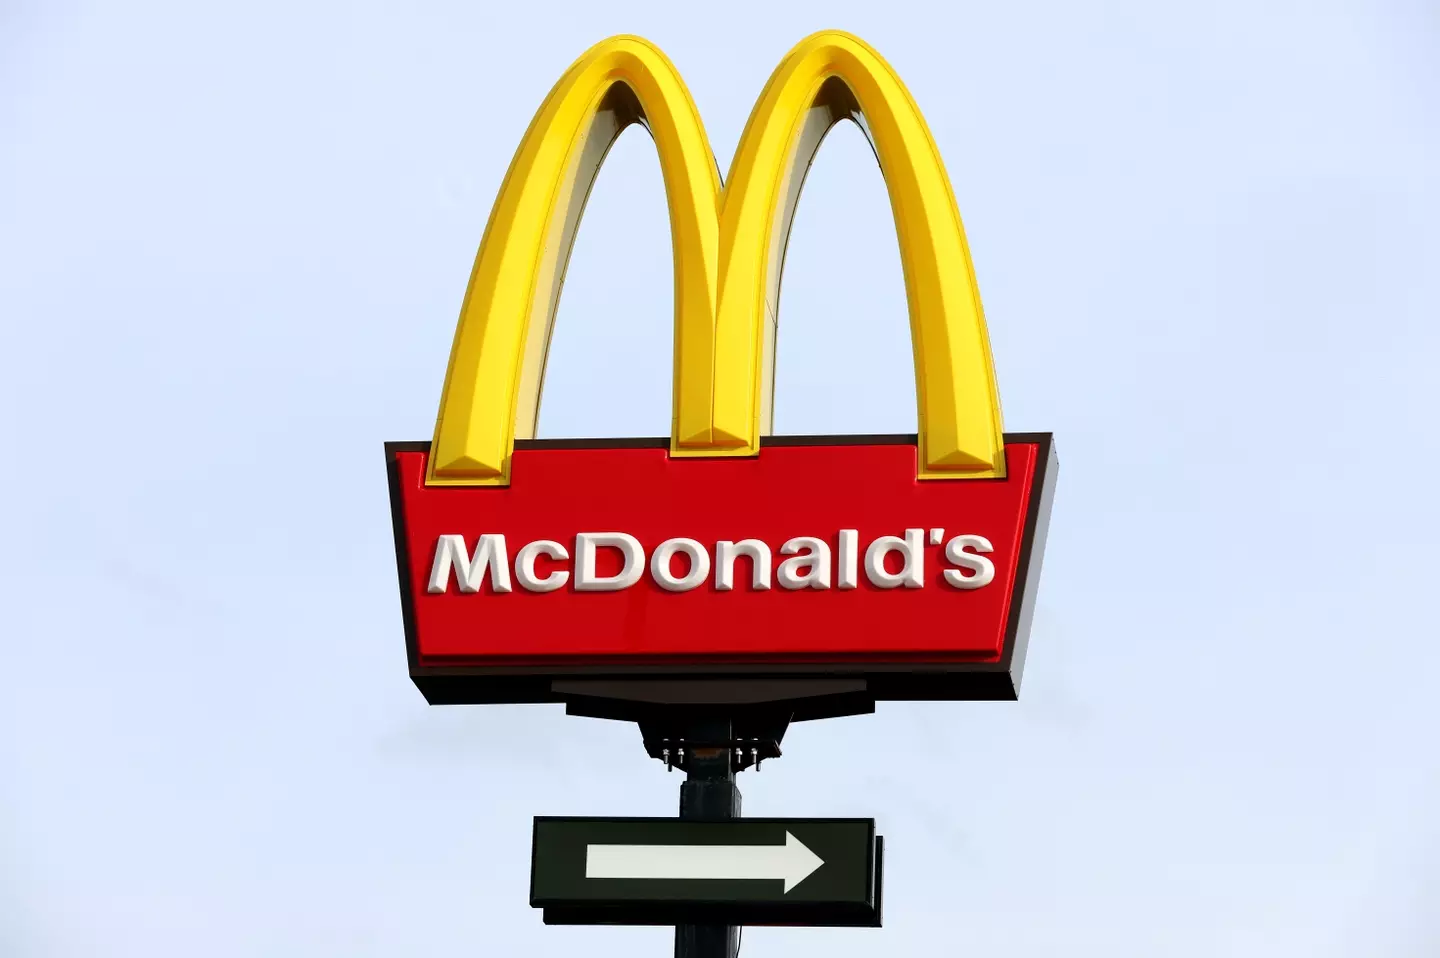 Prices vary across McDonald's stores.